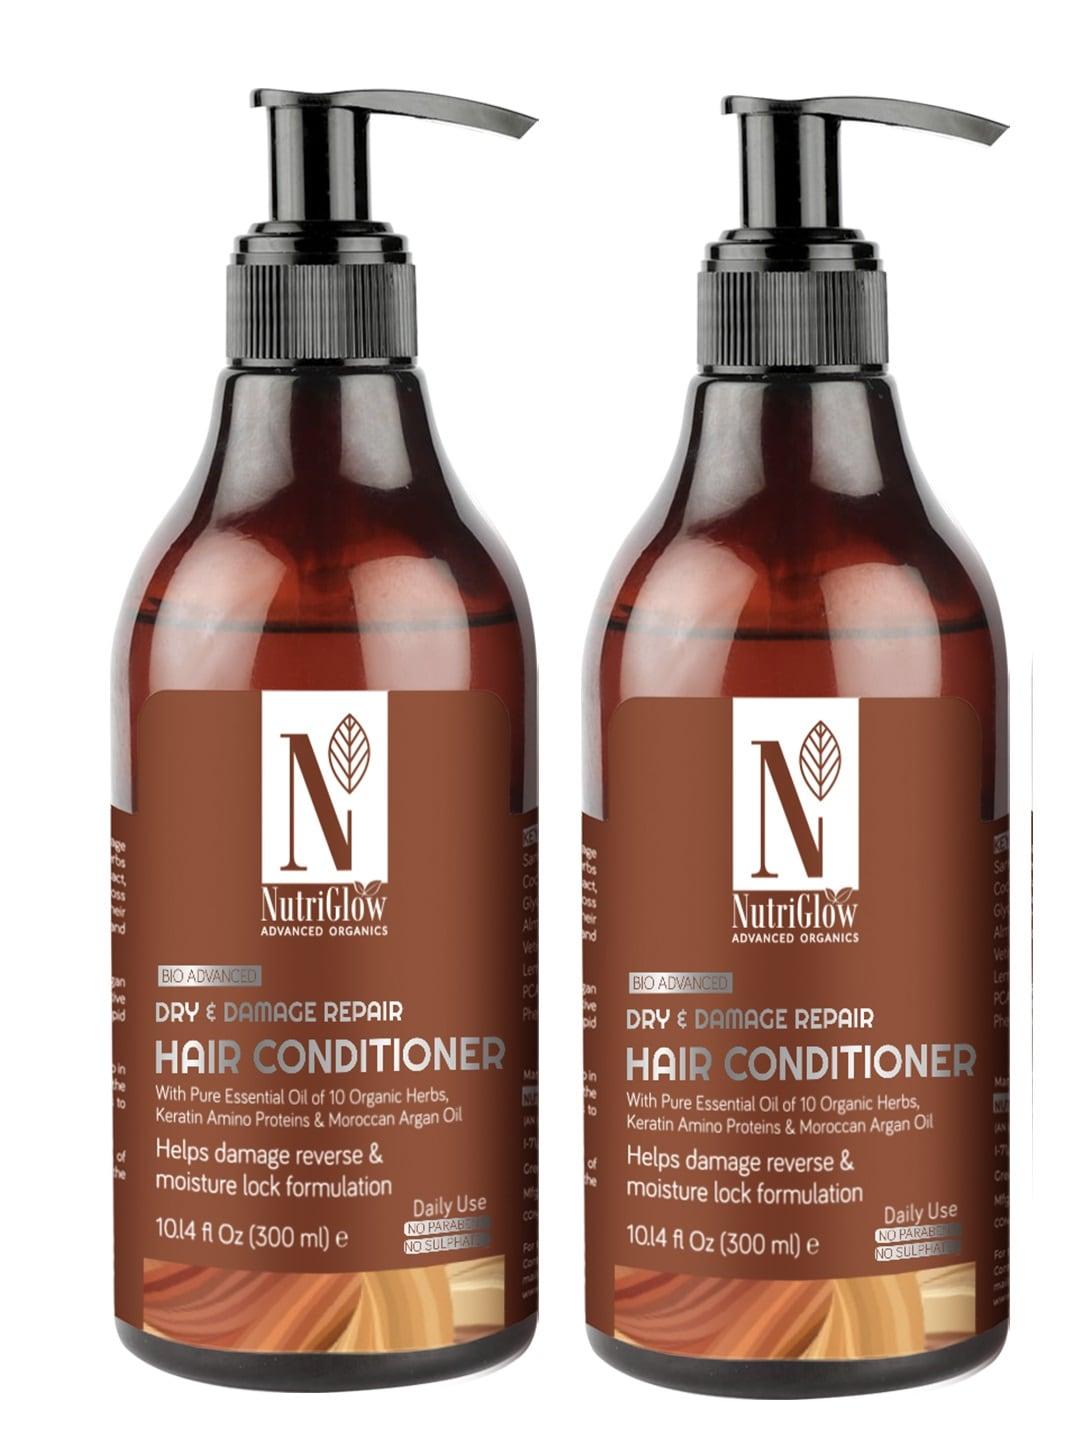 Nutriglow Advanced Organics Pack of 2 Bio Advanced Dry & Damage Repair Hair Conditioner